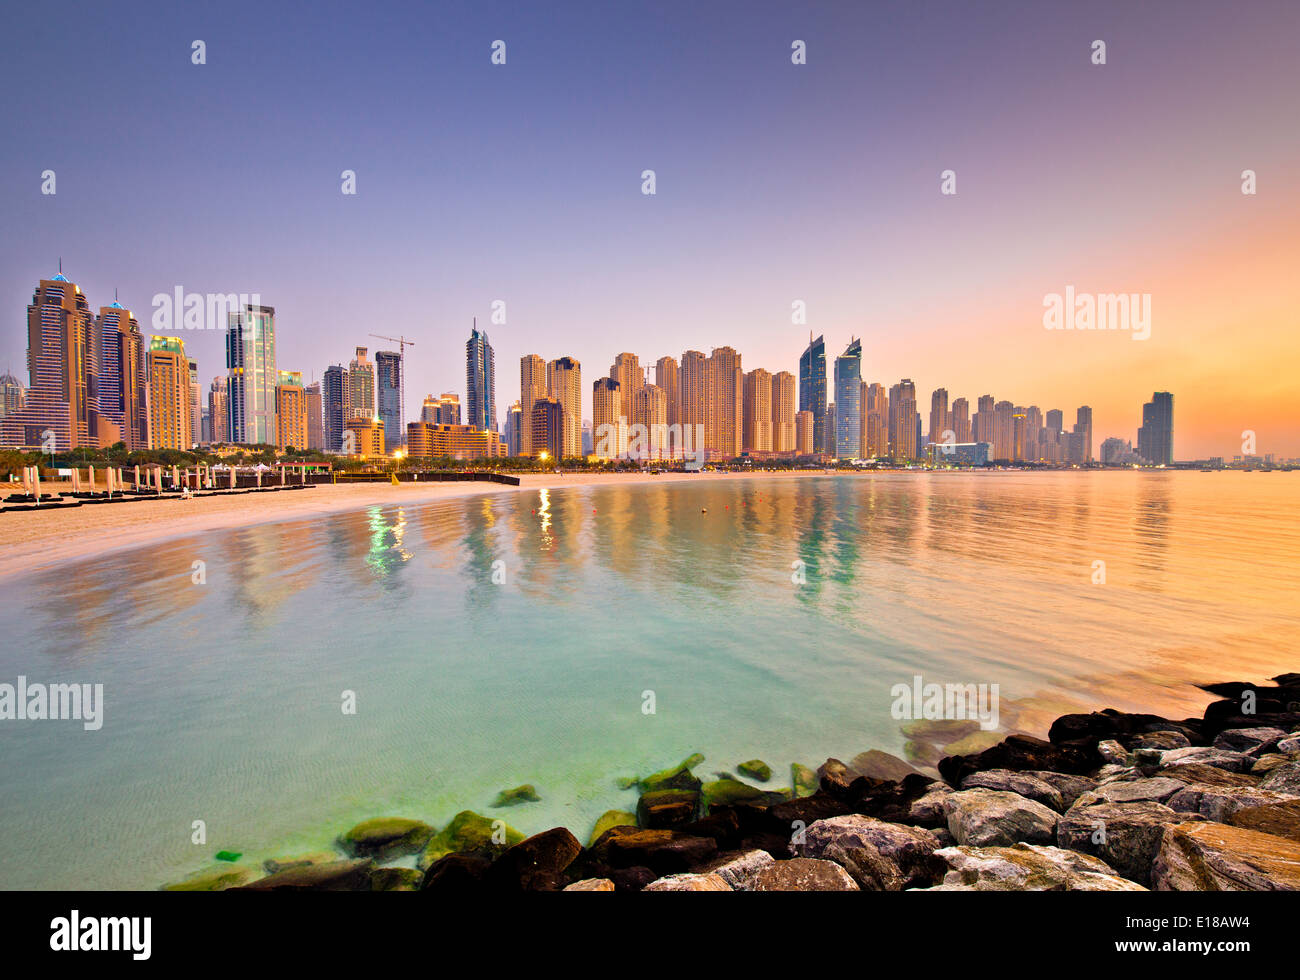 The Skyline of Dubai Stock Photo